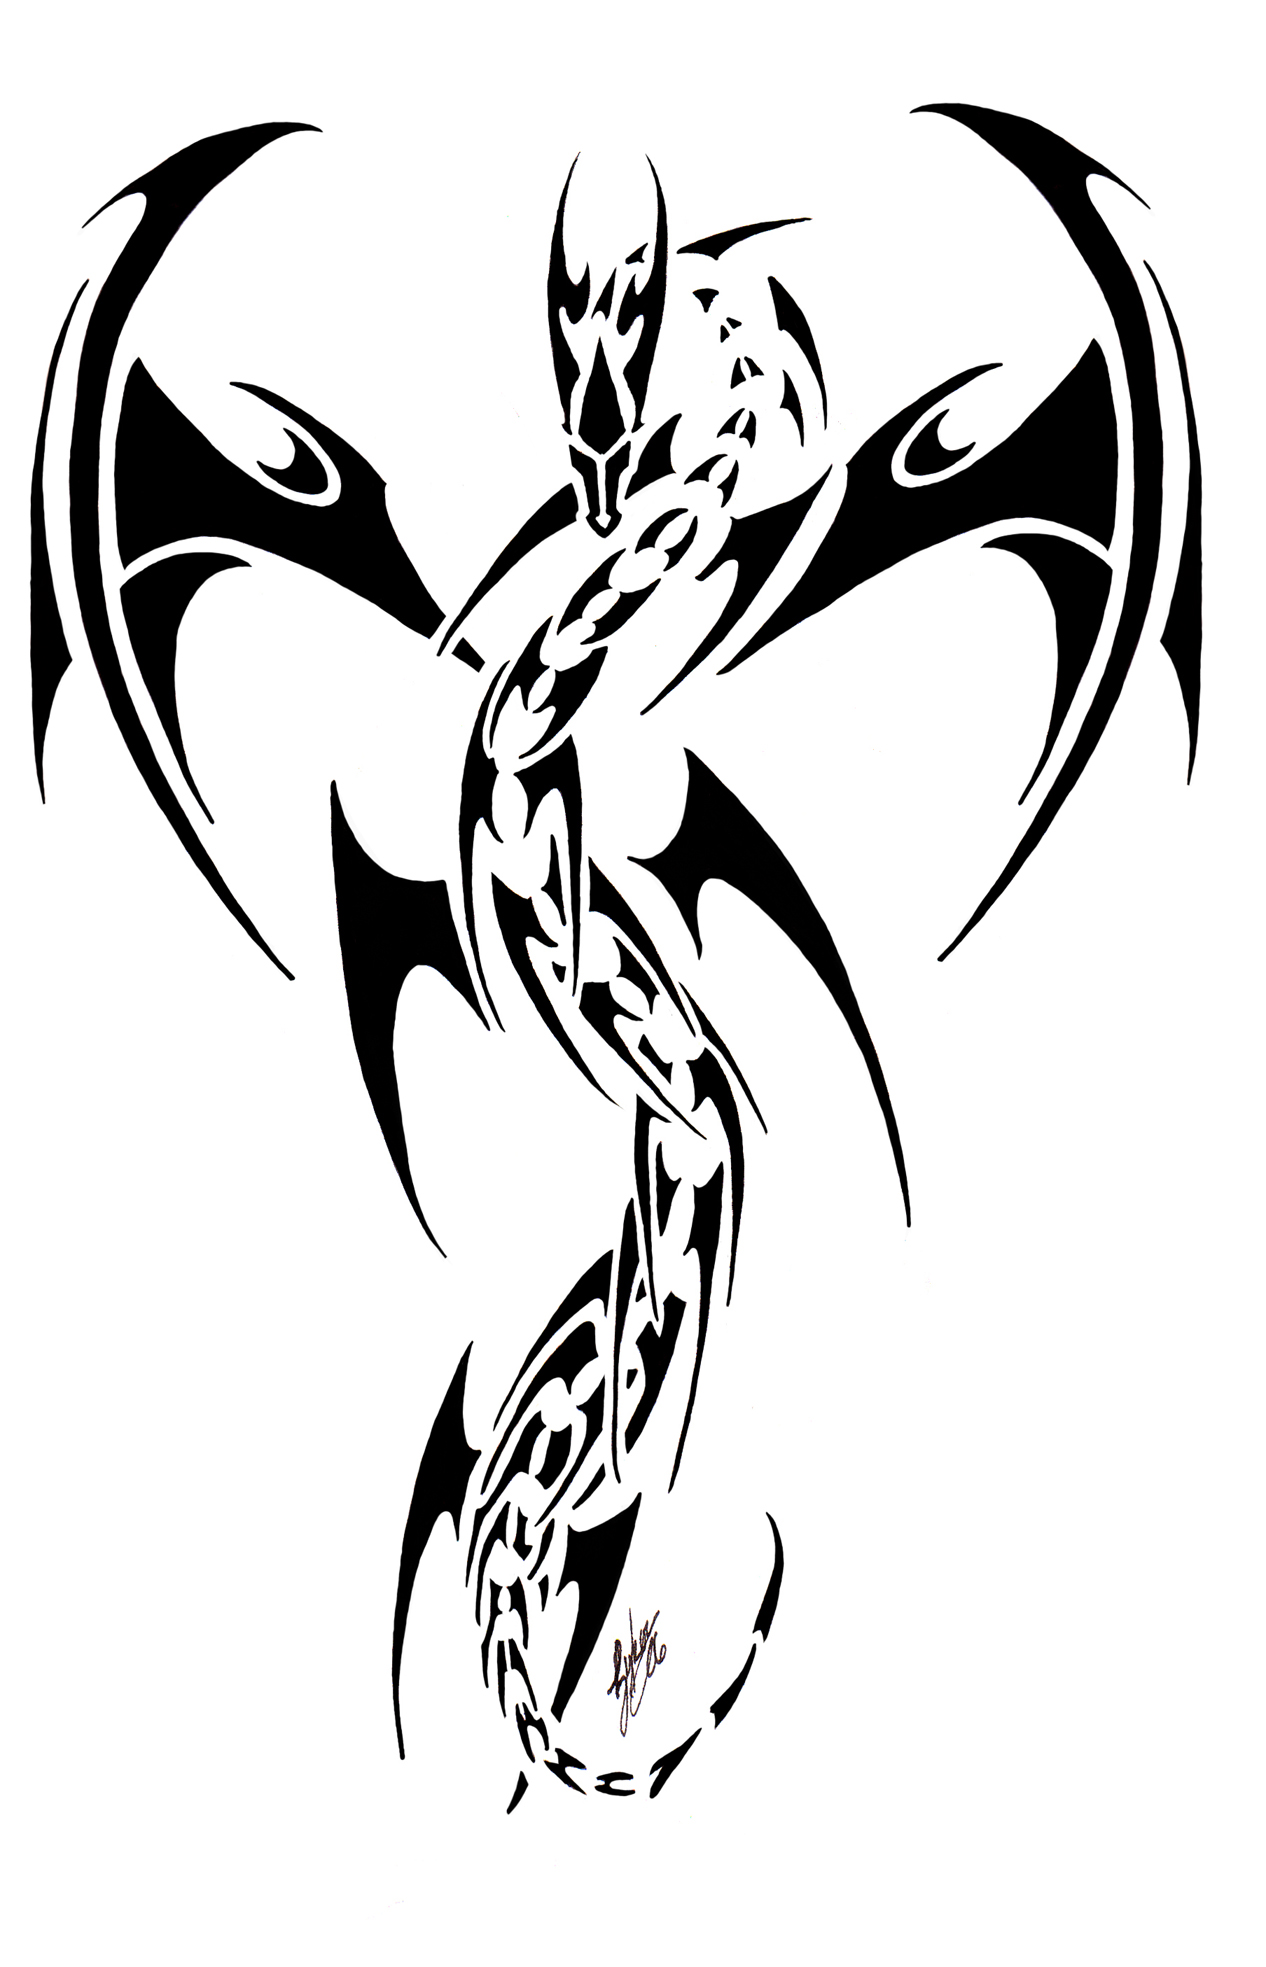 deviantART: More Like Kats Dragon Tattoo Version 2 by